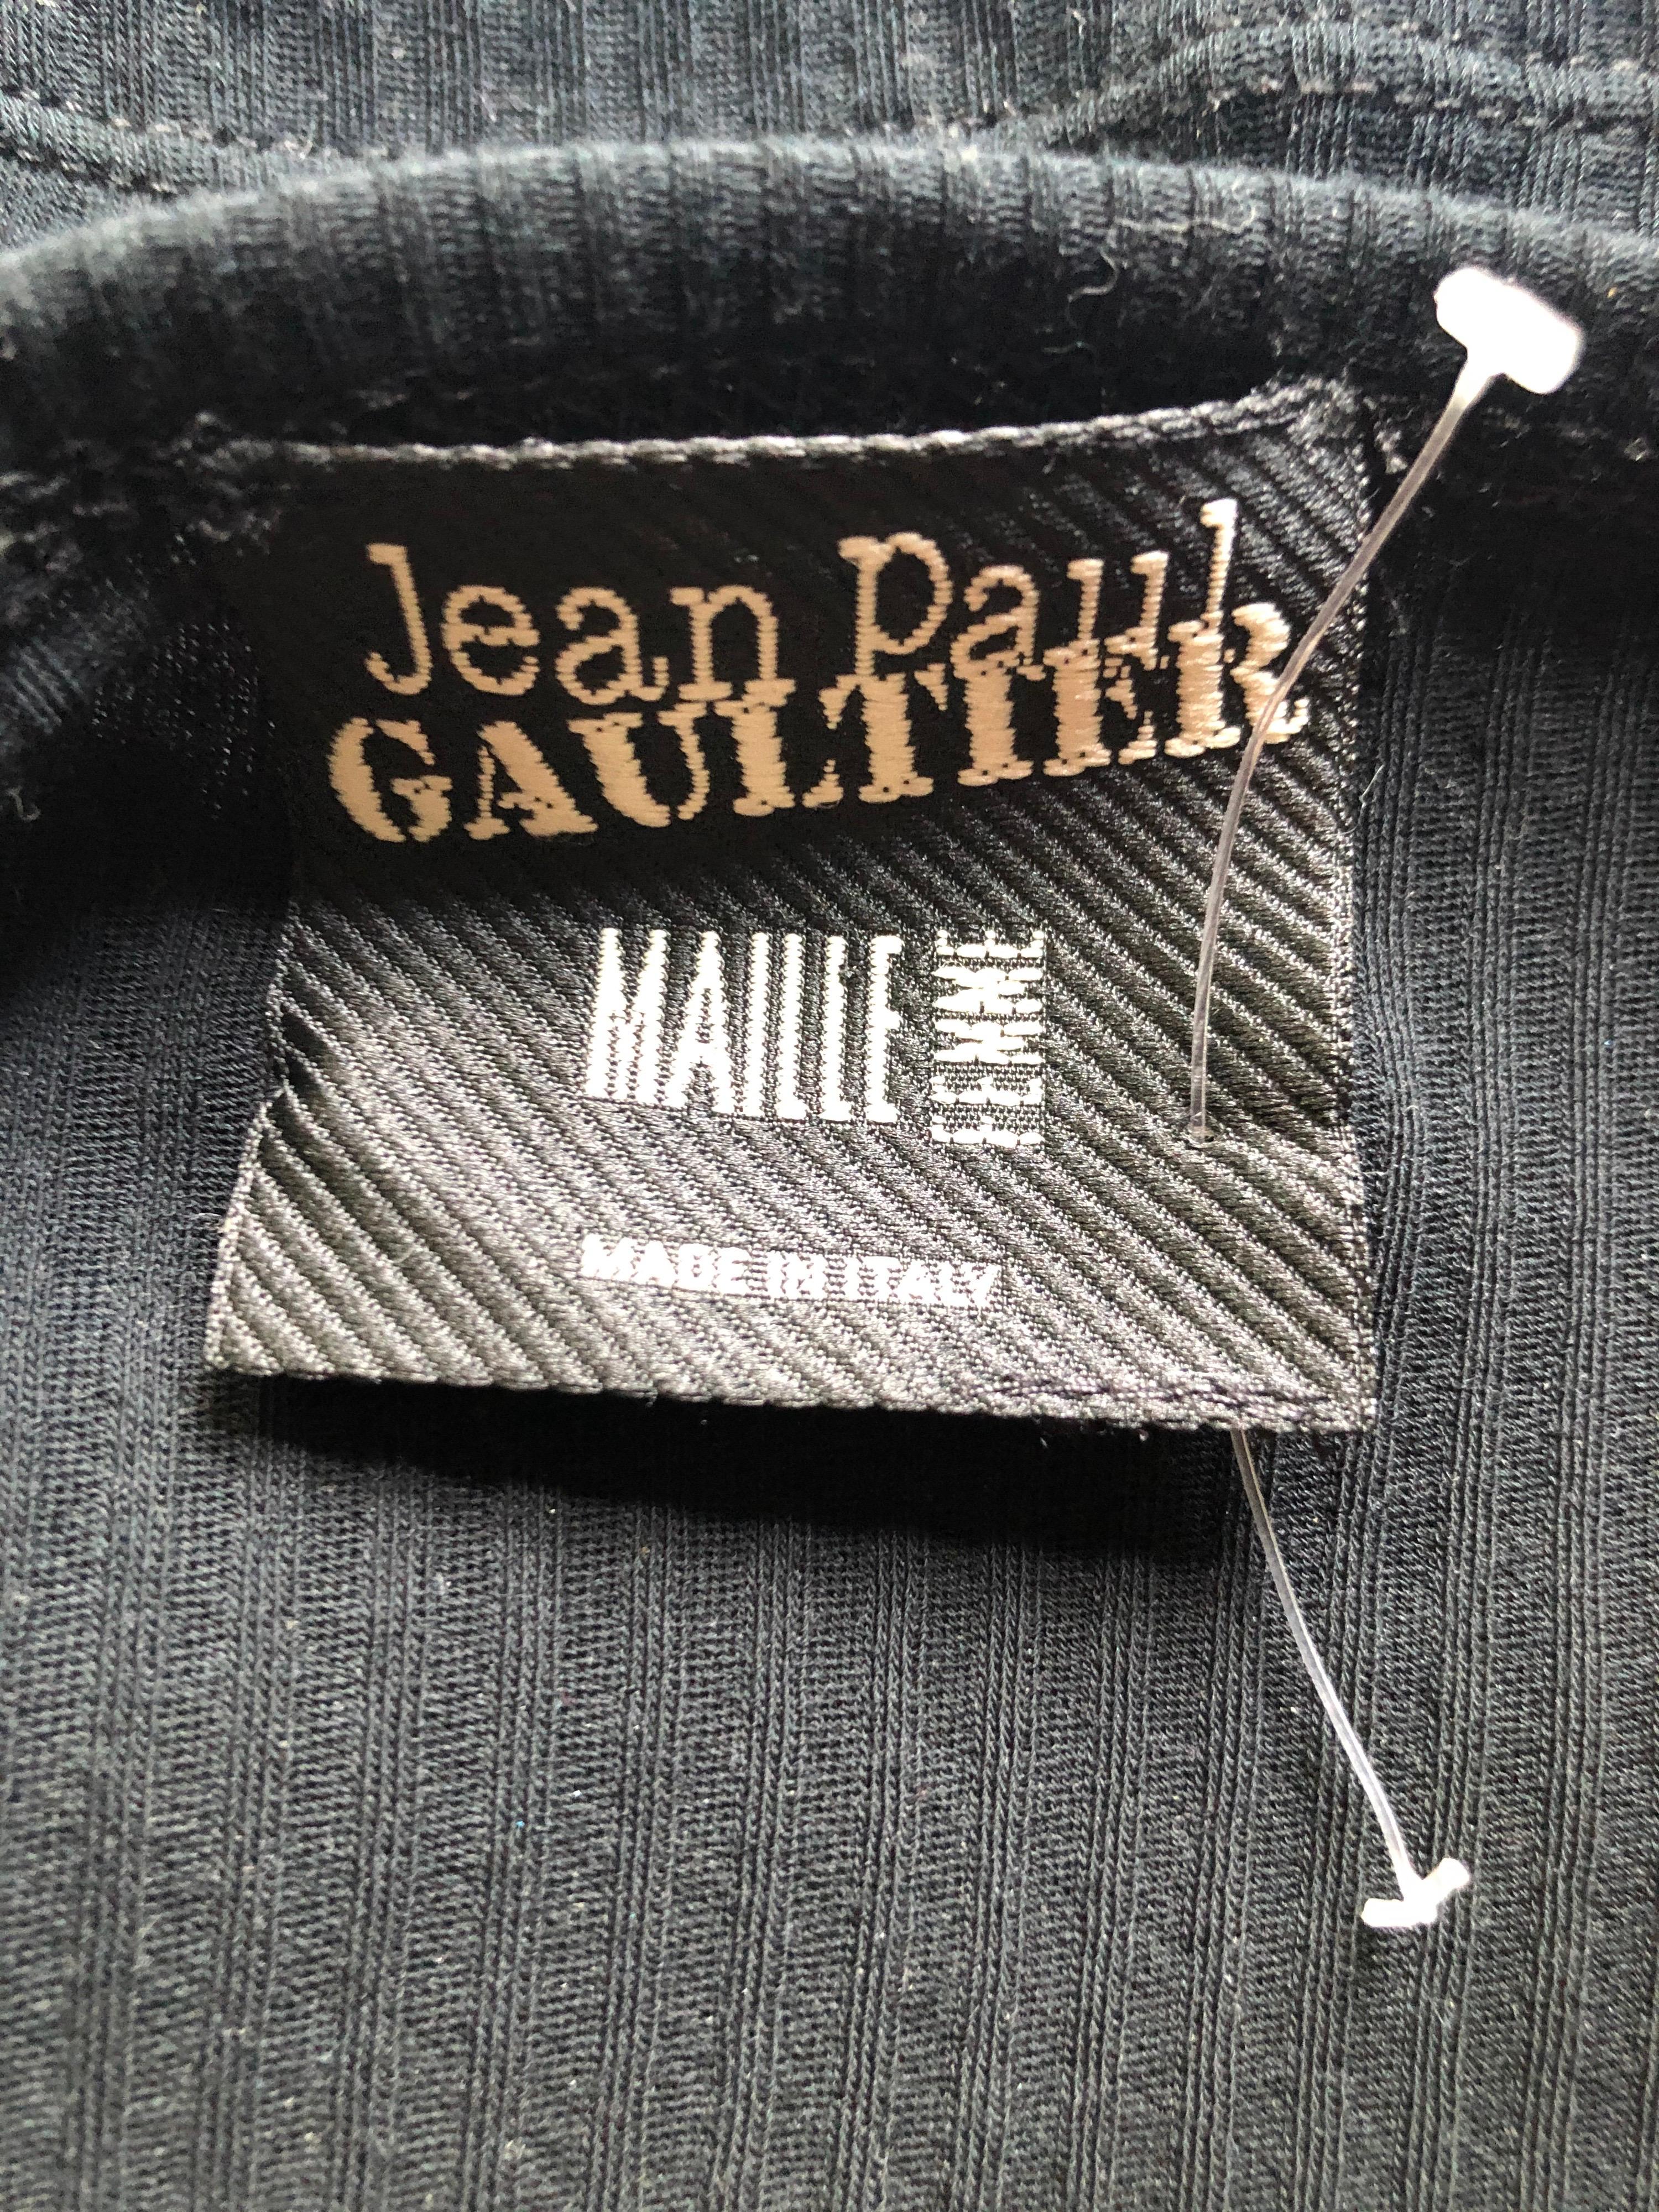 Jean Paul Gaultier Bondage Cone Bra Top and Mini Skirt 2 Piece Set For Sale 5